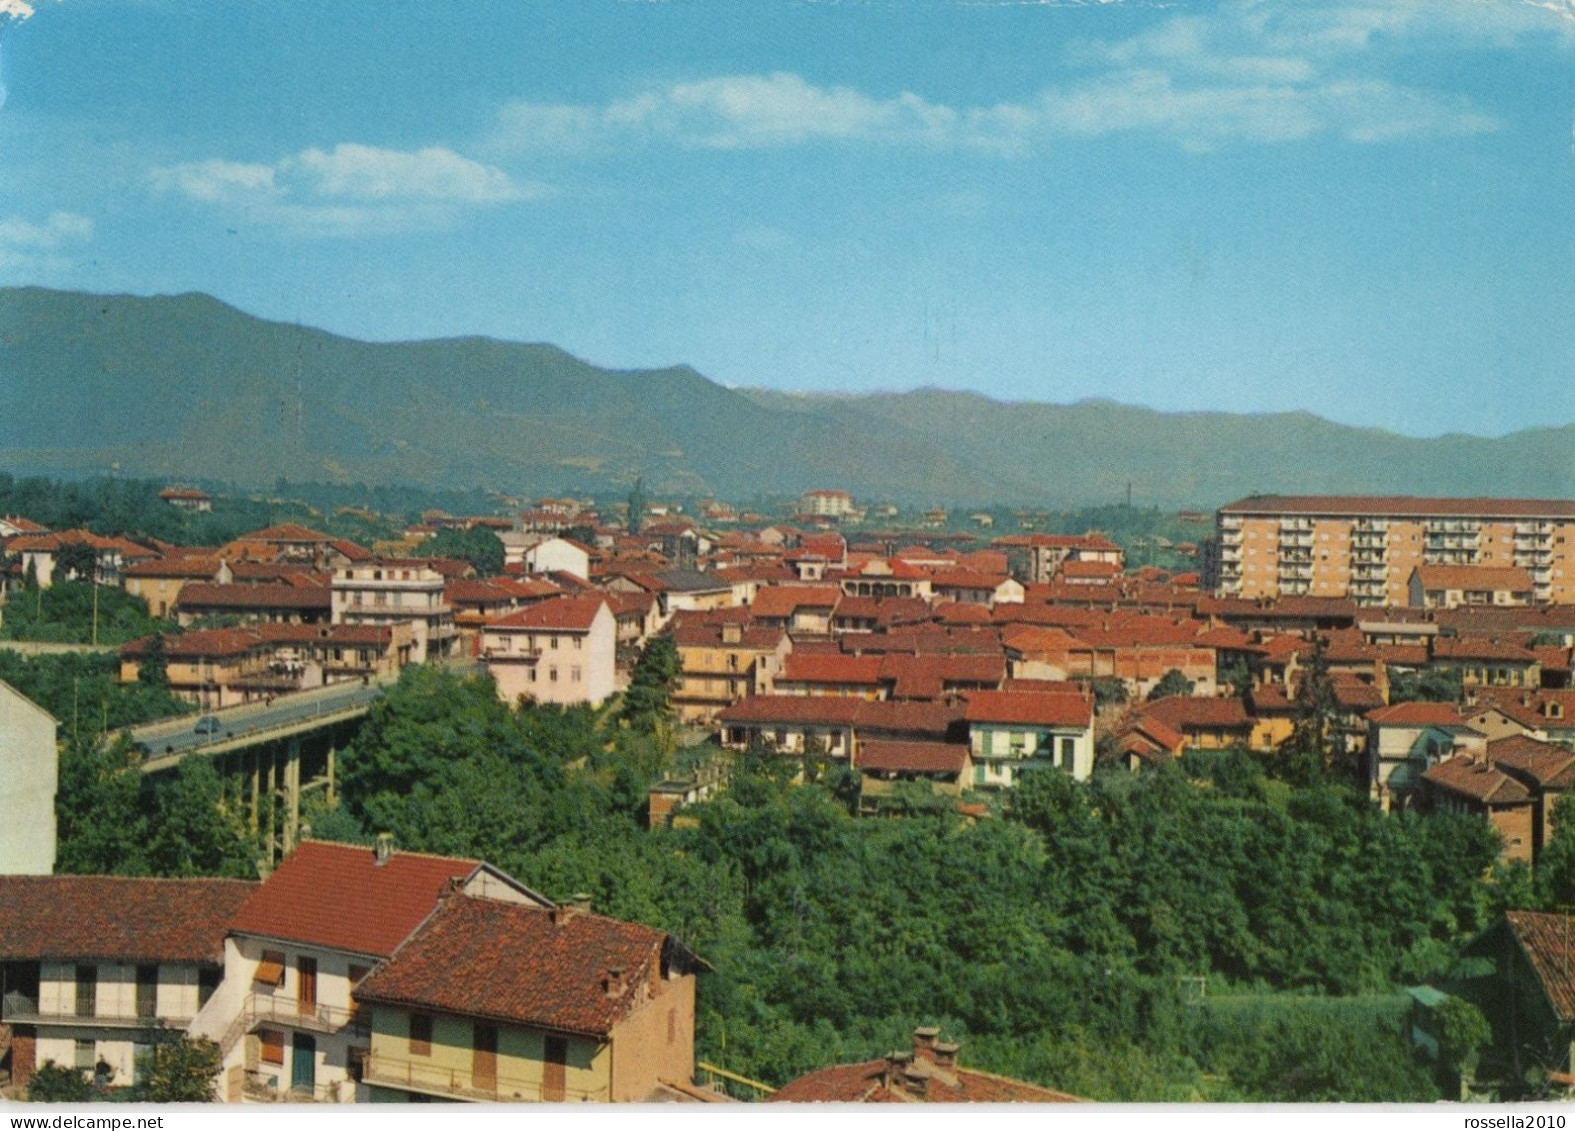 Cartolina ITALIA TORINO ALPIGNANO PANORAMA Italy  Postcard Italien Postkarten Carte Postale - Viste Panoramiche, Panorama